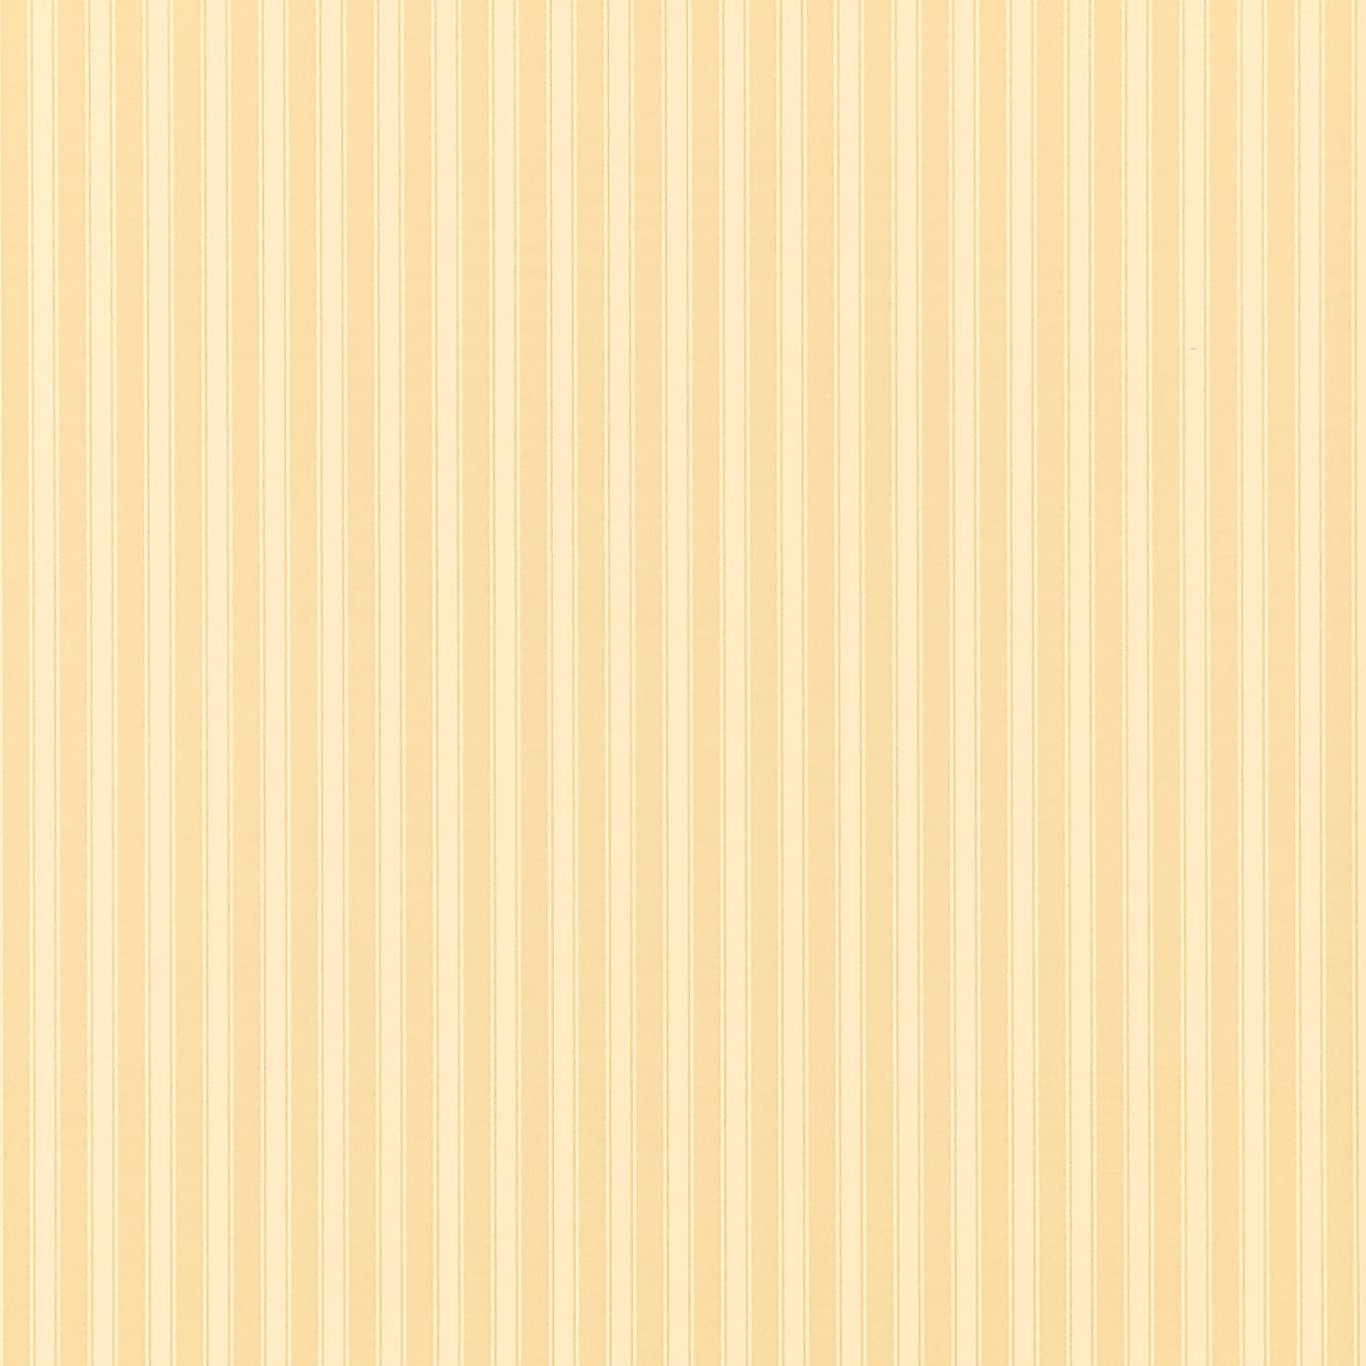 New Tiger Stripe Wallpaper - Sand